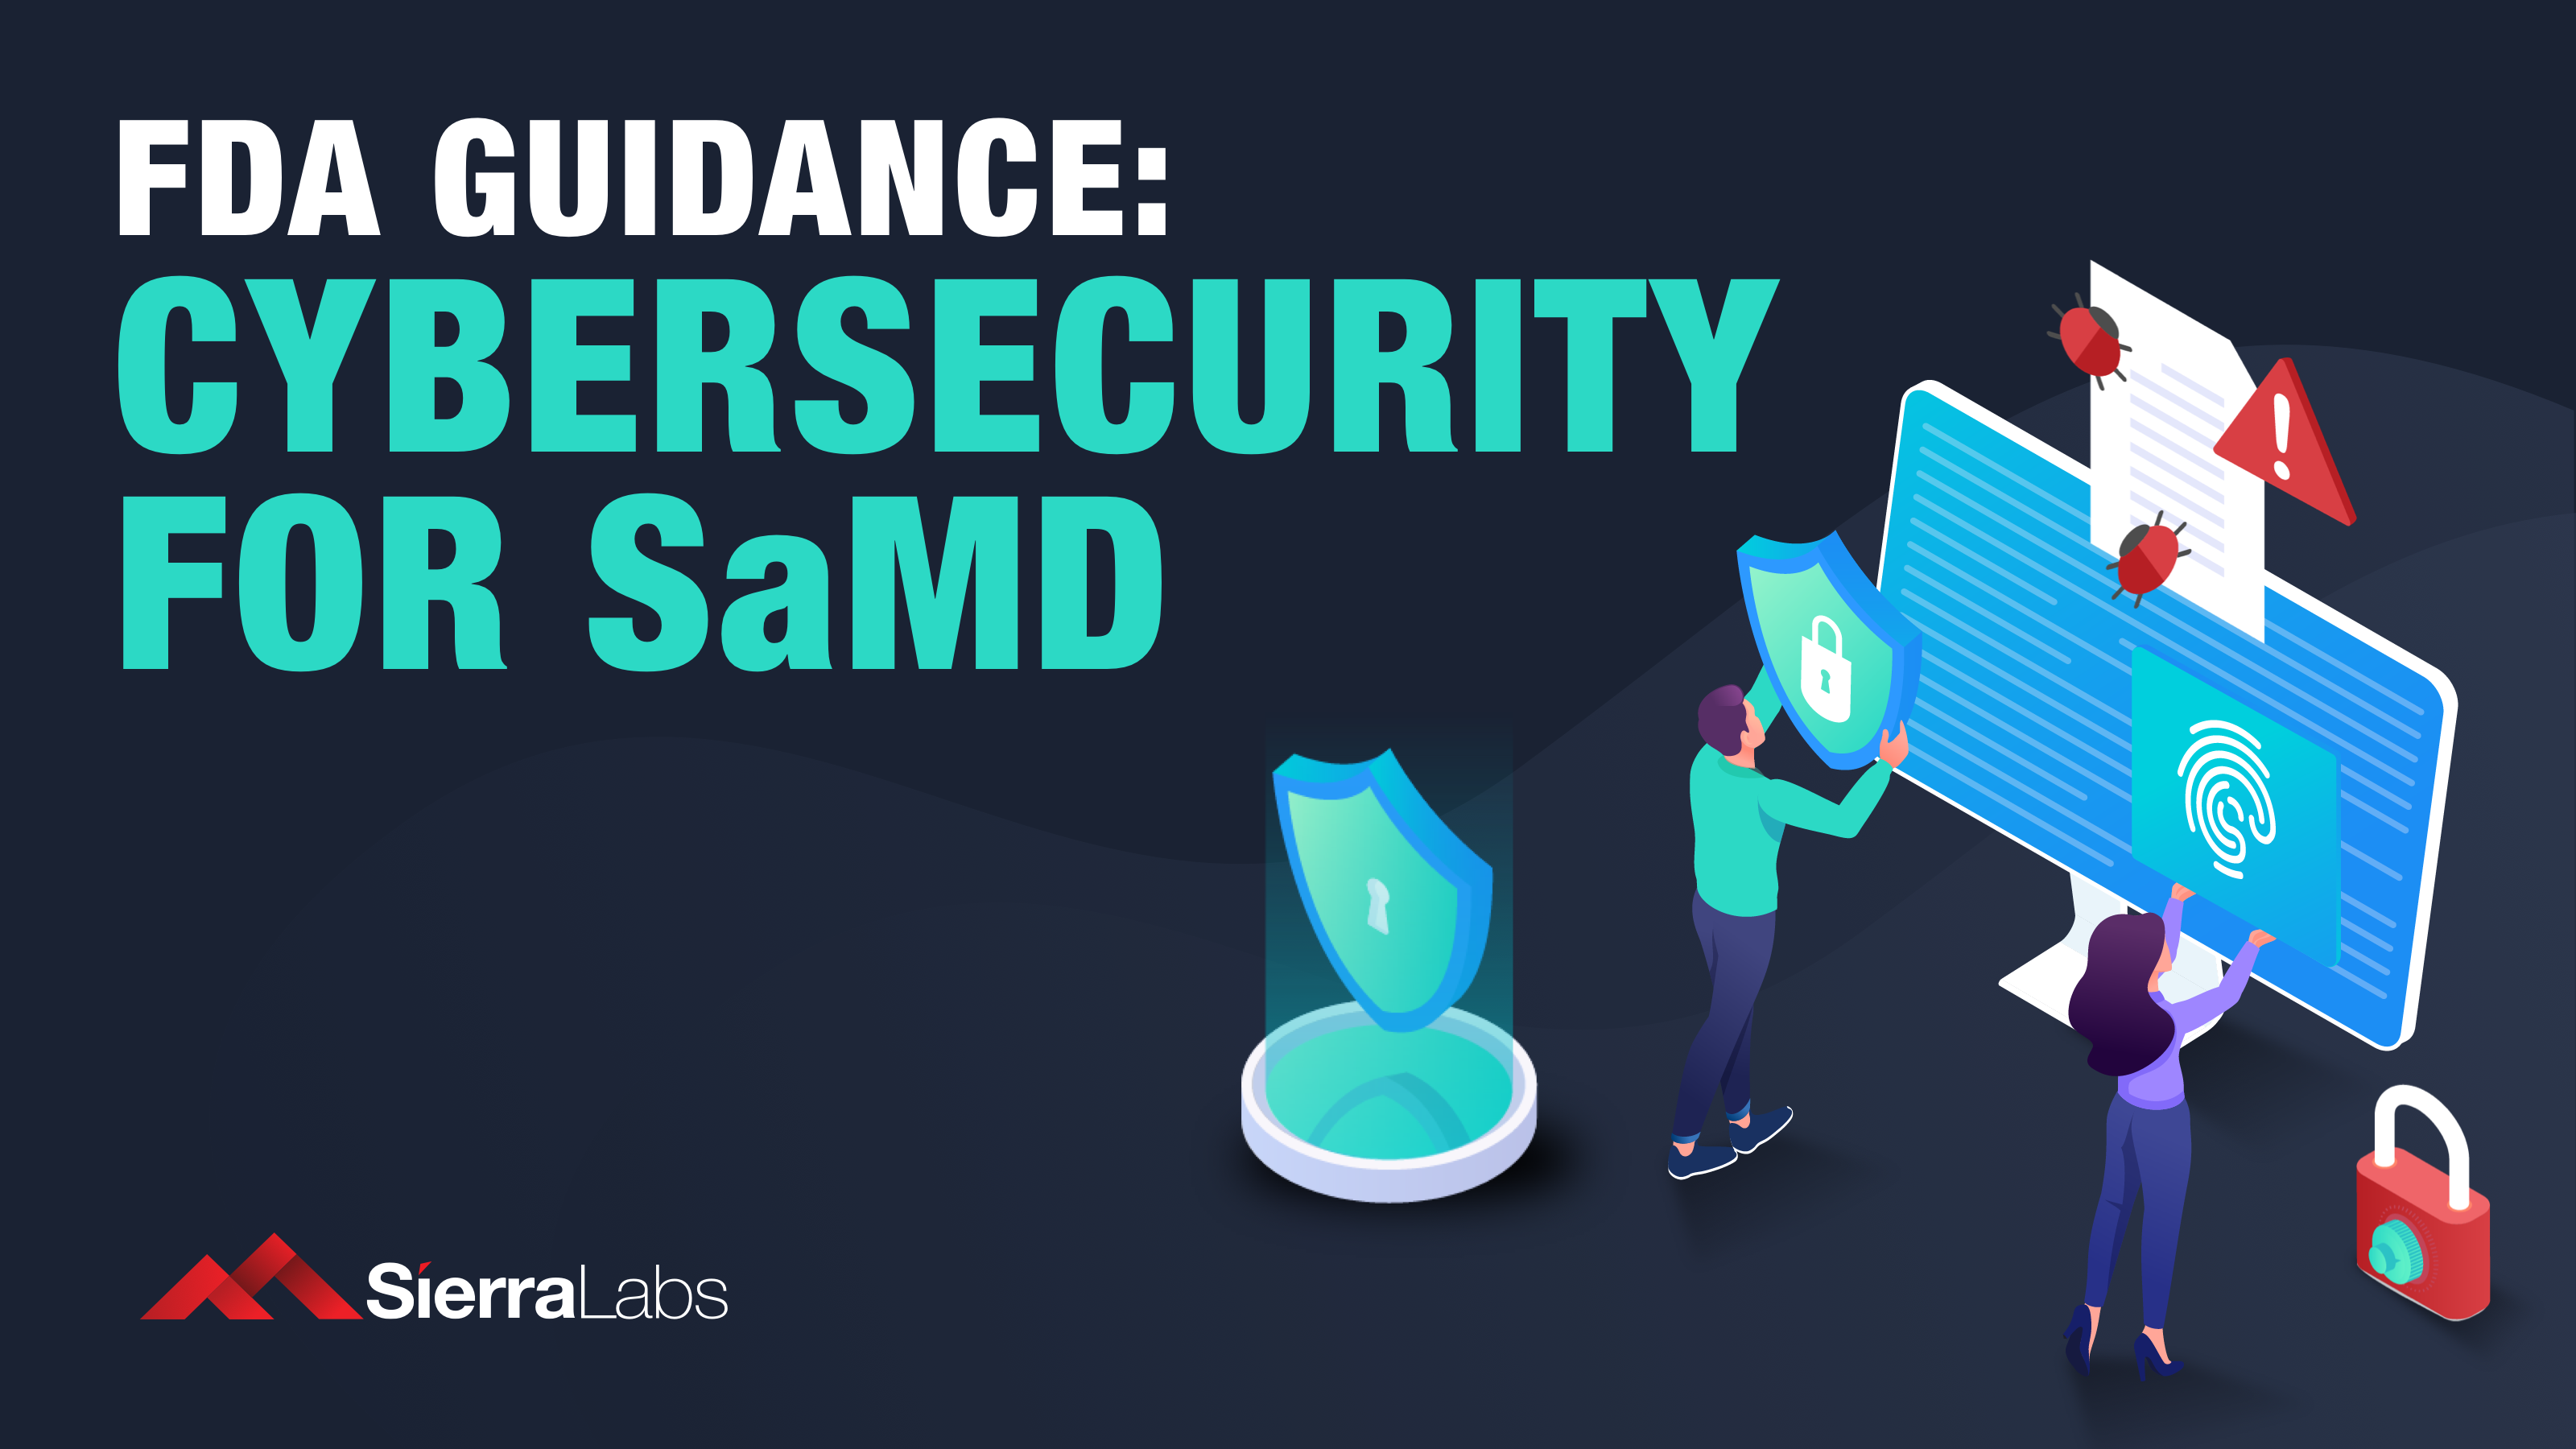 FDA Guidance Cybersecurity for SaMD